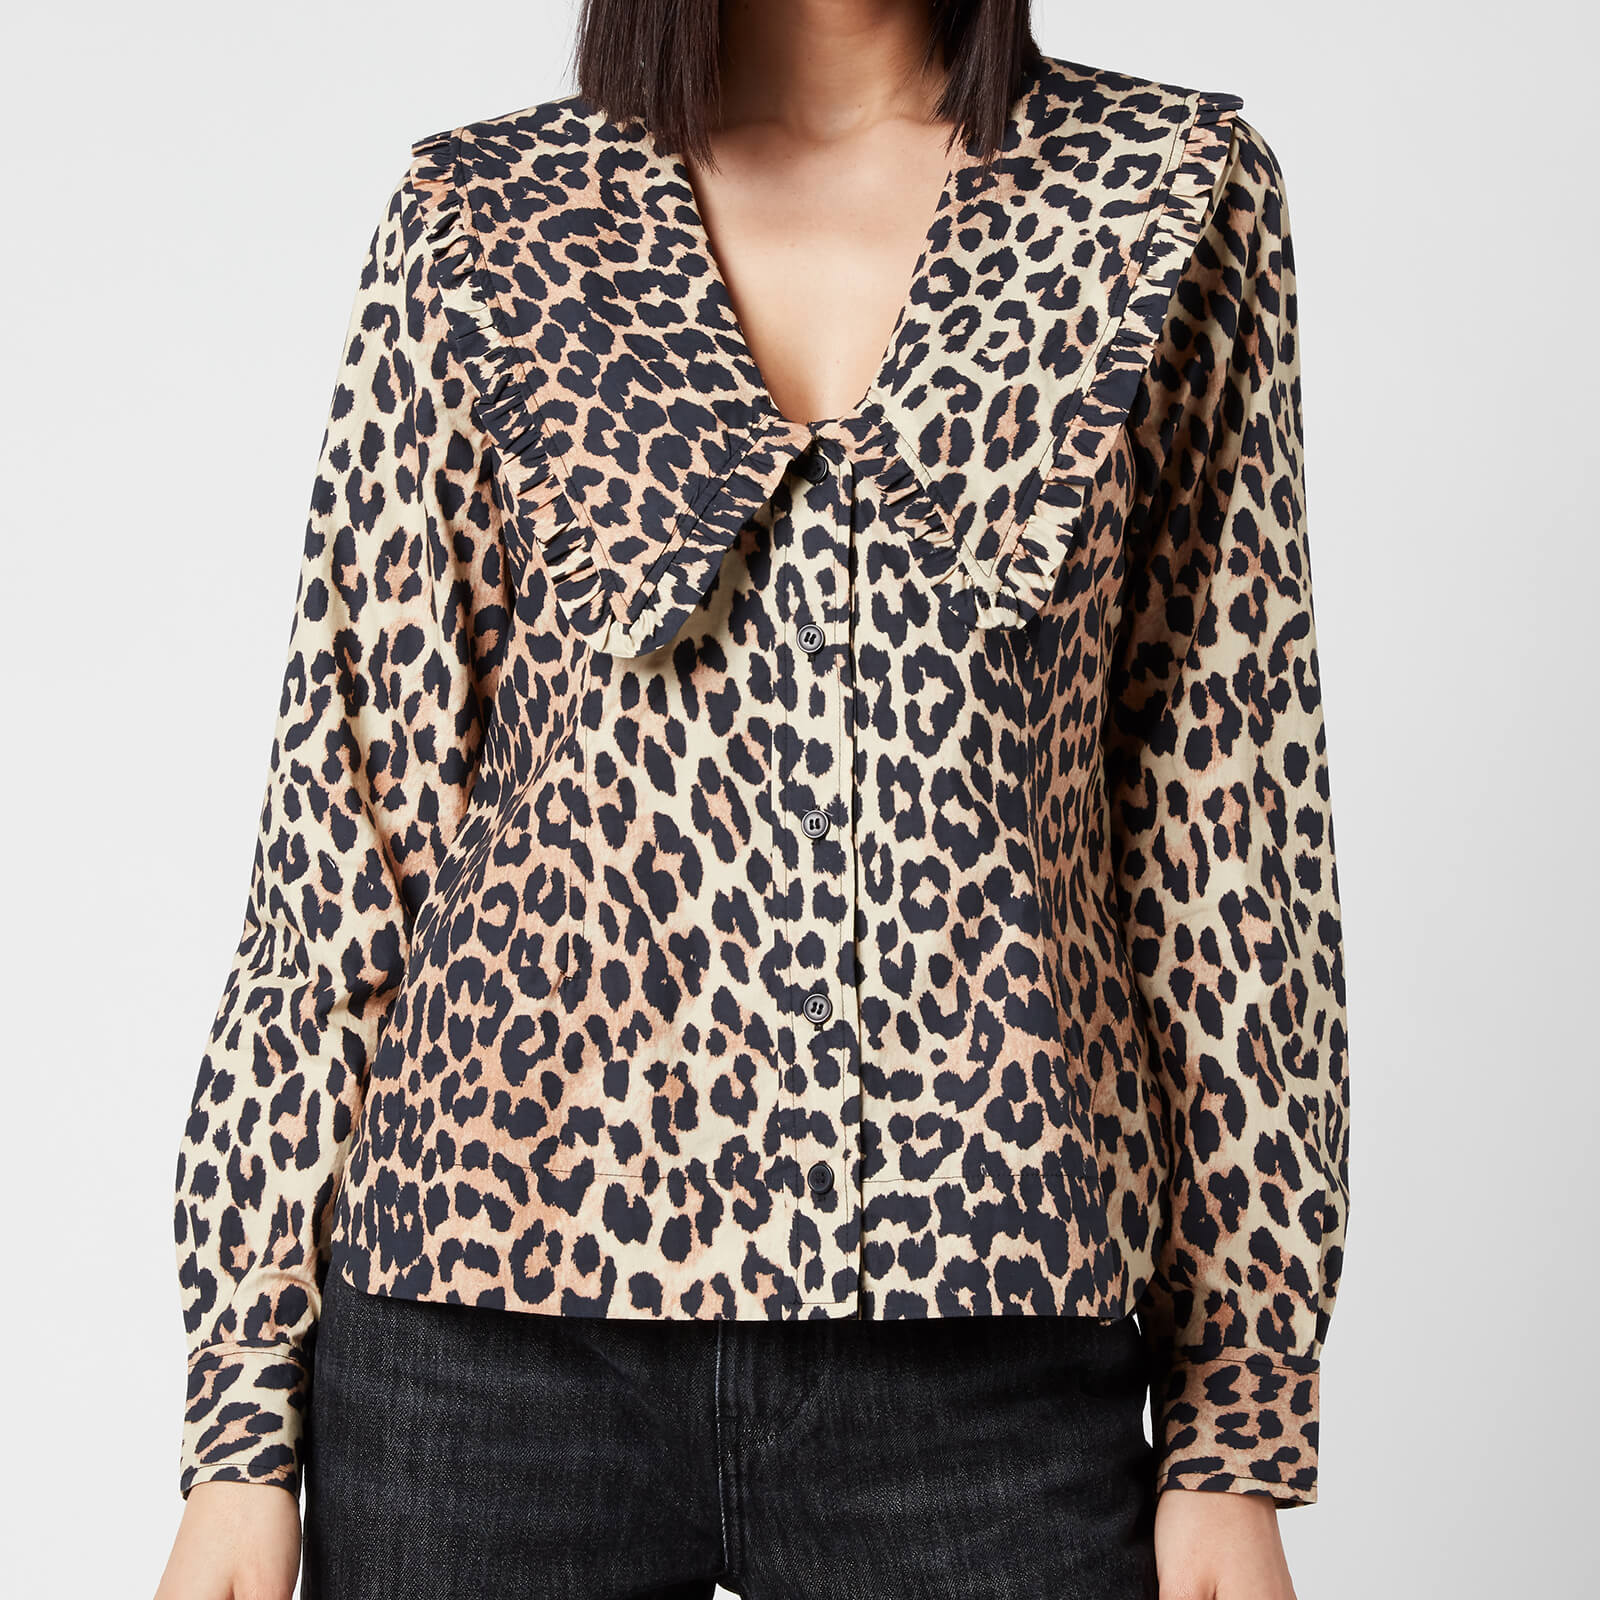 Ganni Women's Printed Cotton Poplin Shirt - Leopard - Eu 36/Uk 8